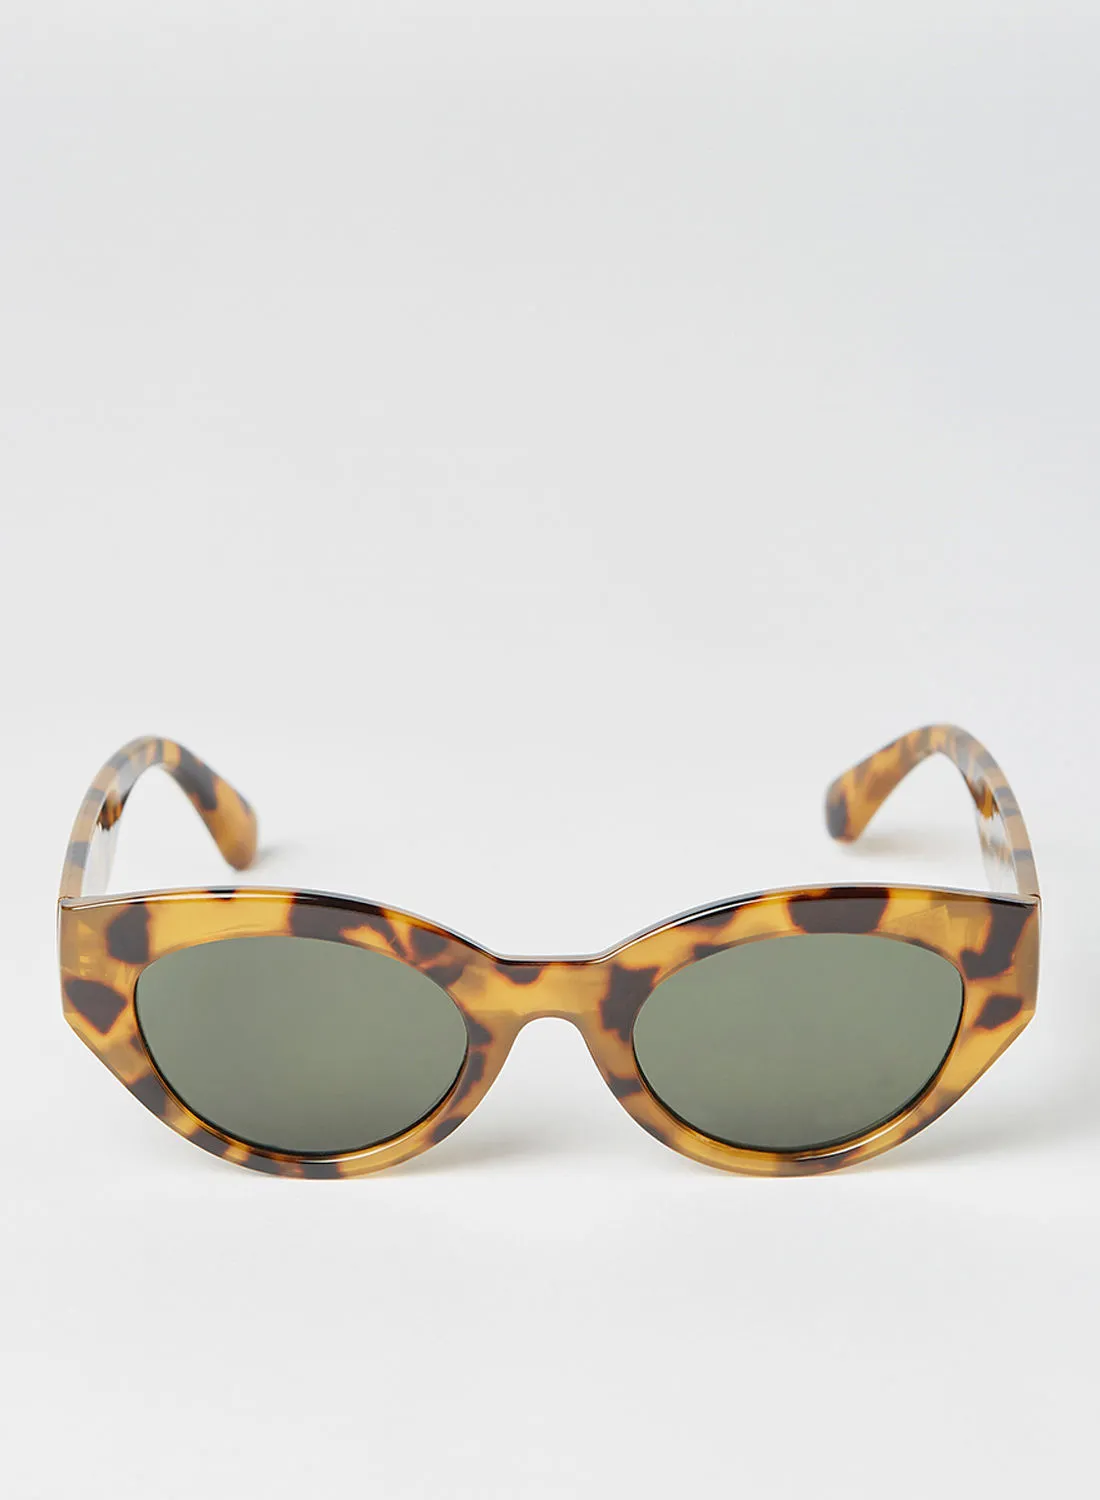 A.J. Morgan Women's Retro Inspired Cat-Eye Sunglasses